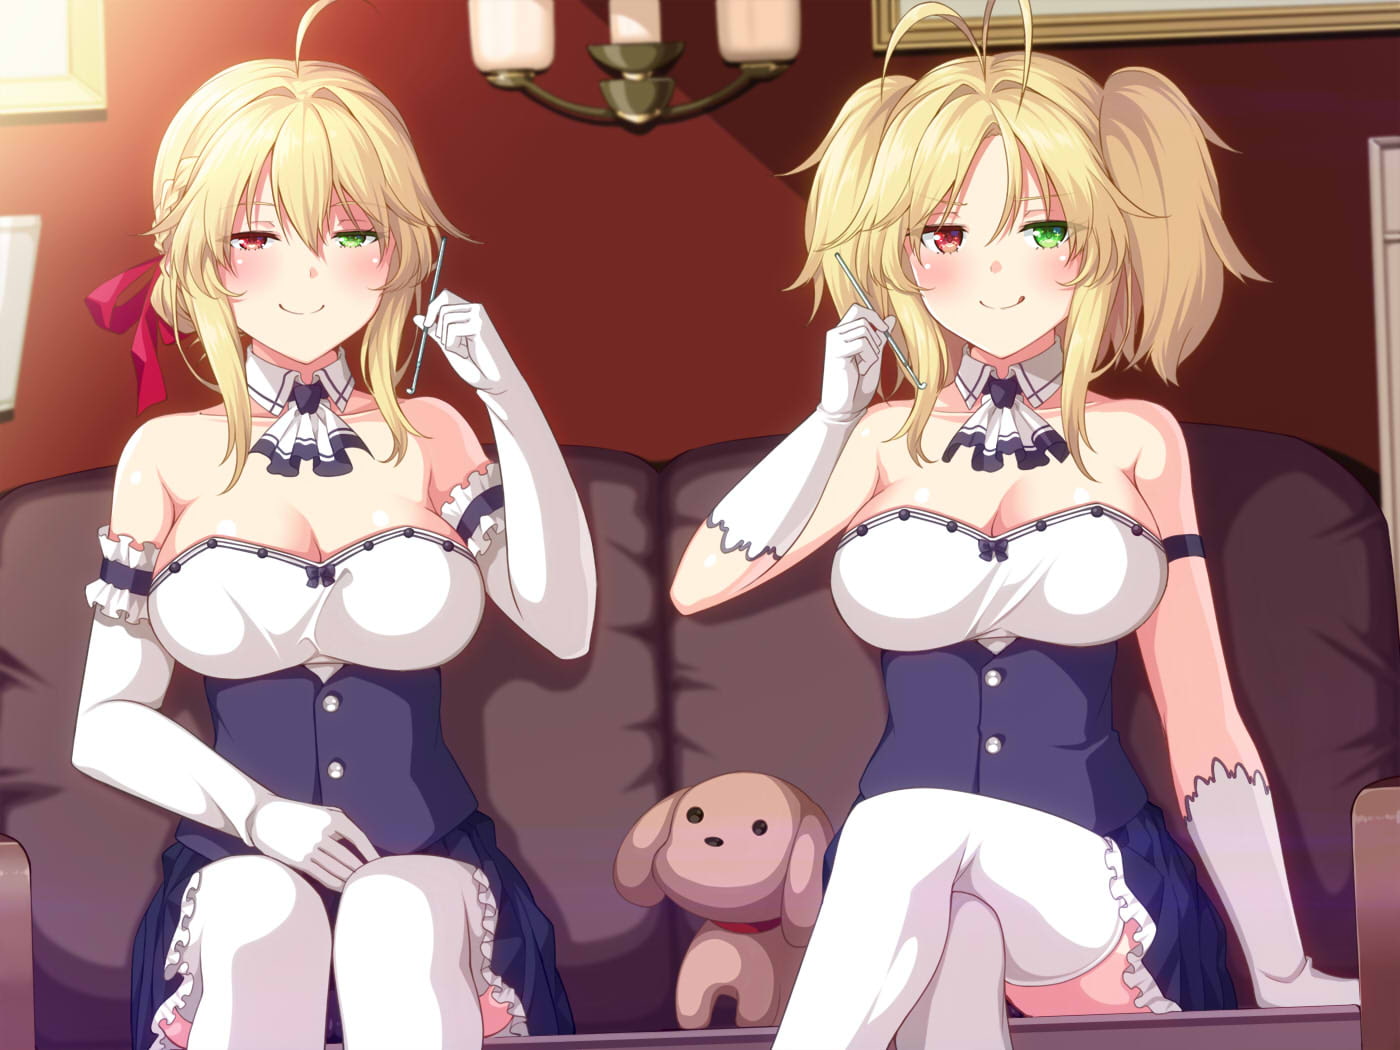 Earpicks of blonde maid dolls